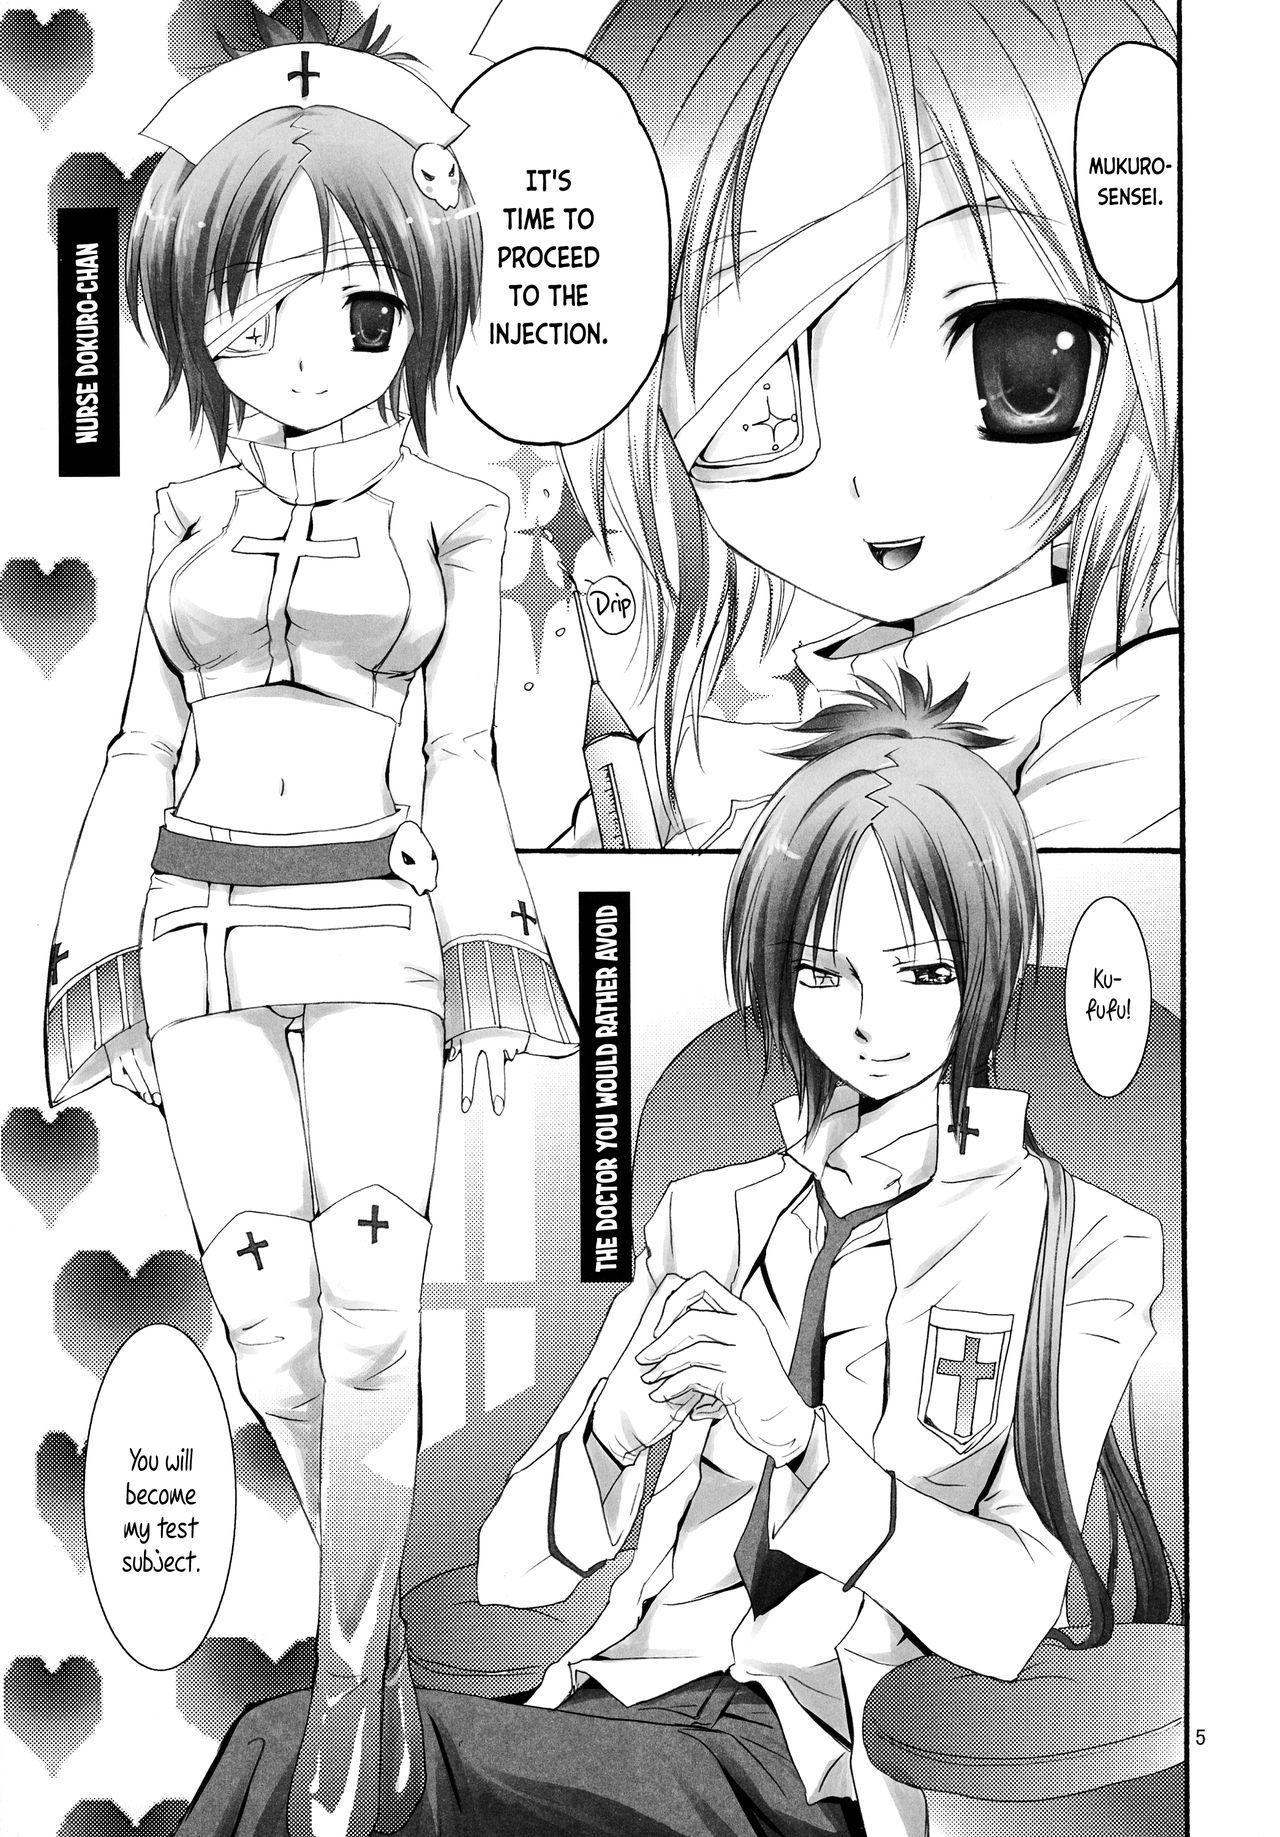 Sixtynine CANDY SHUFFLE - Katekyo hitman reborn Anime - Page 6